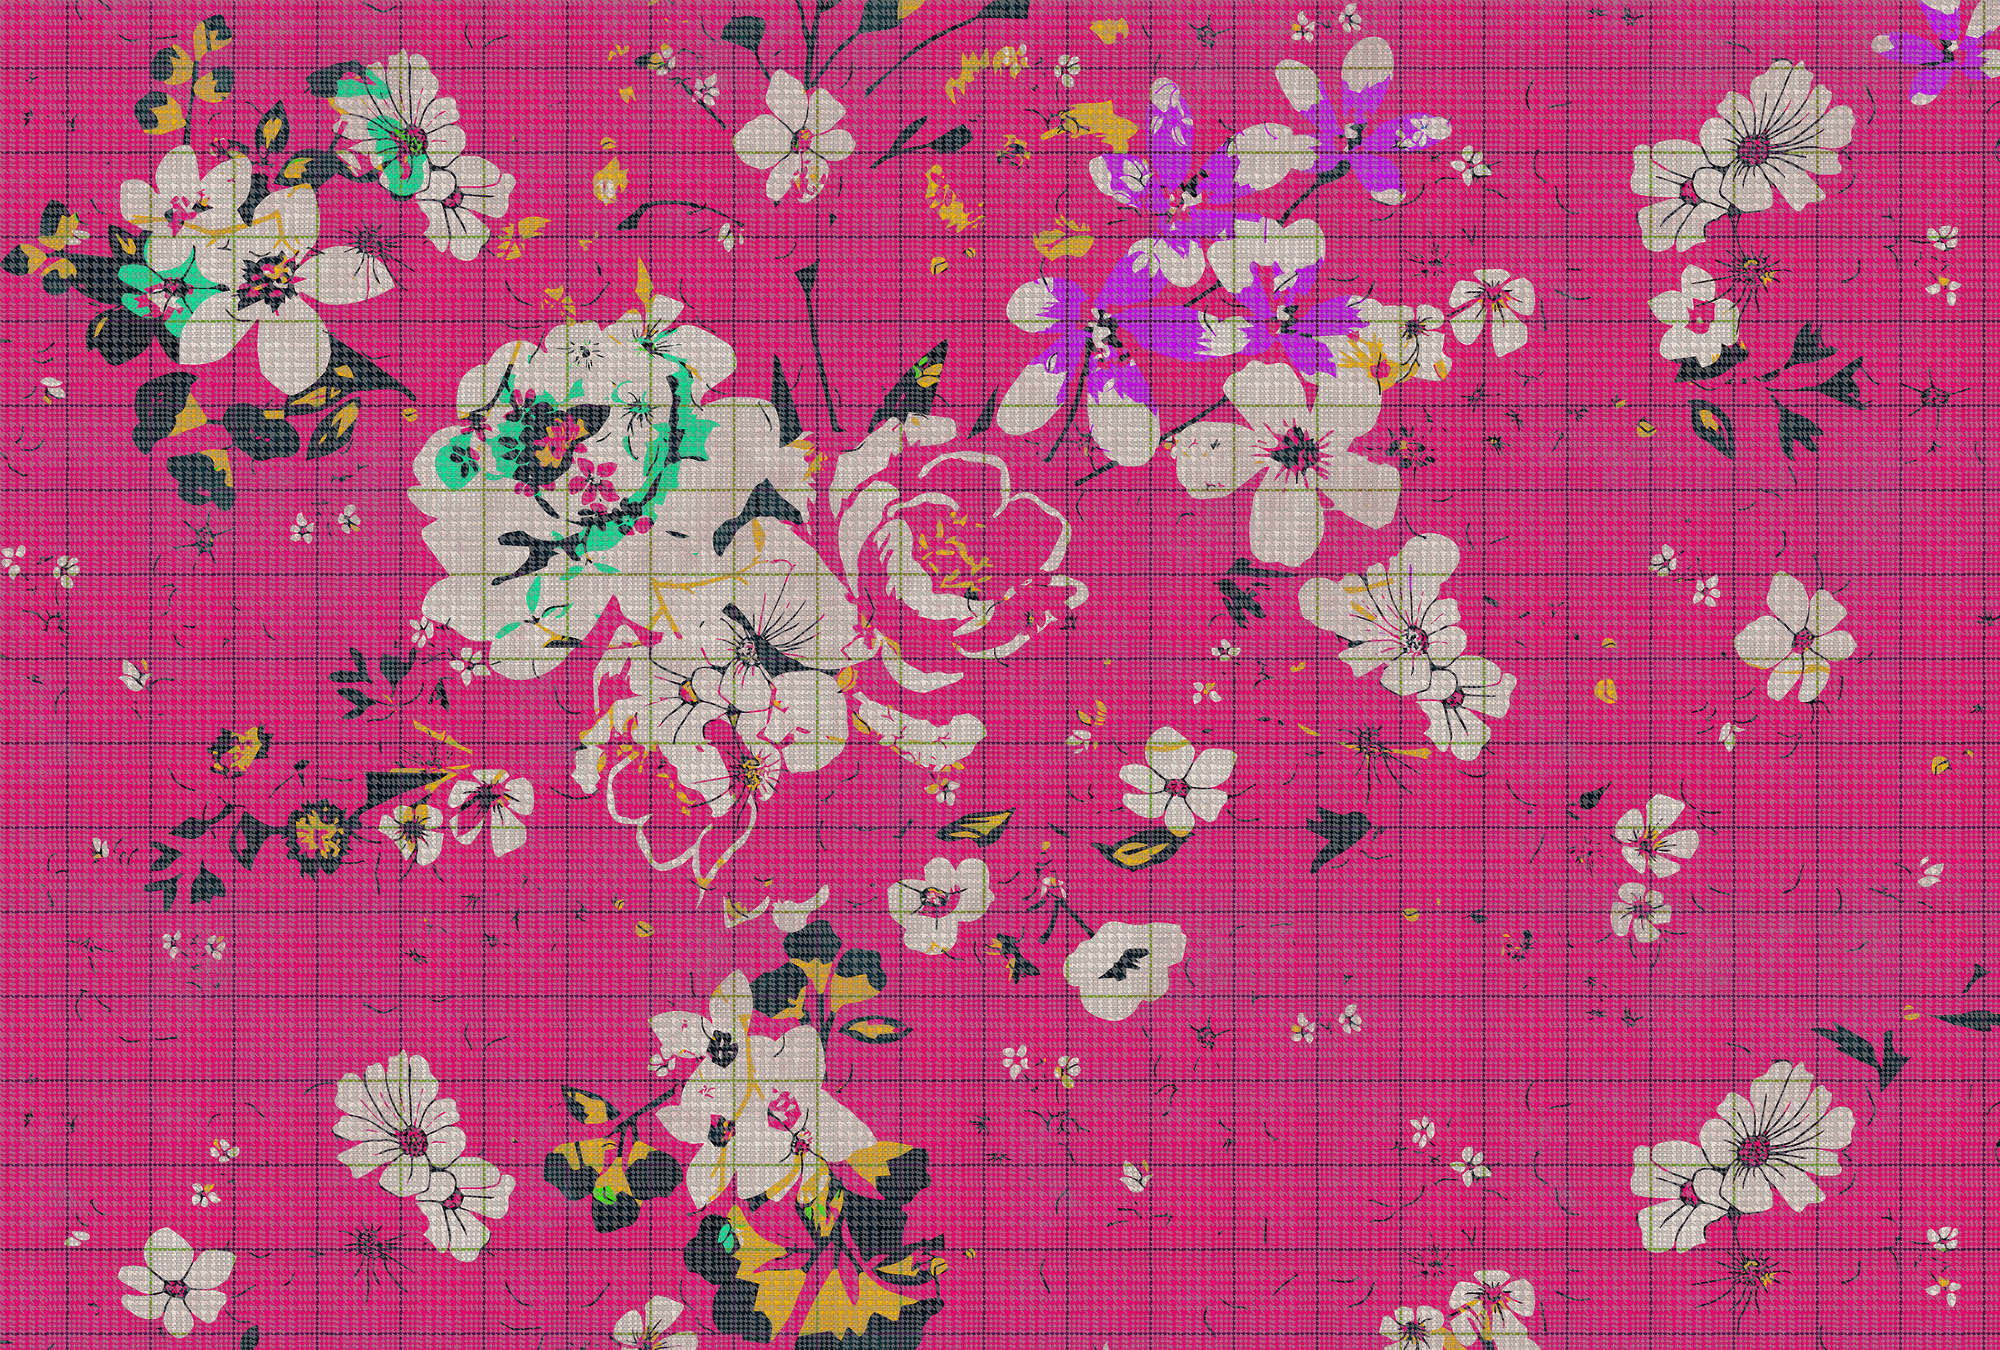             Plaid flor 2 - Papel pintado fotomural en óptica de cuadros mosaico de flores de colores Rosa - Verde, Rosa | nácar liso polar
        